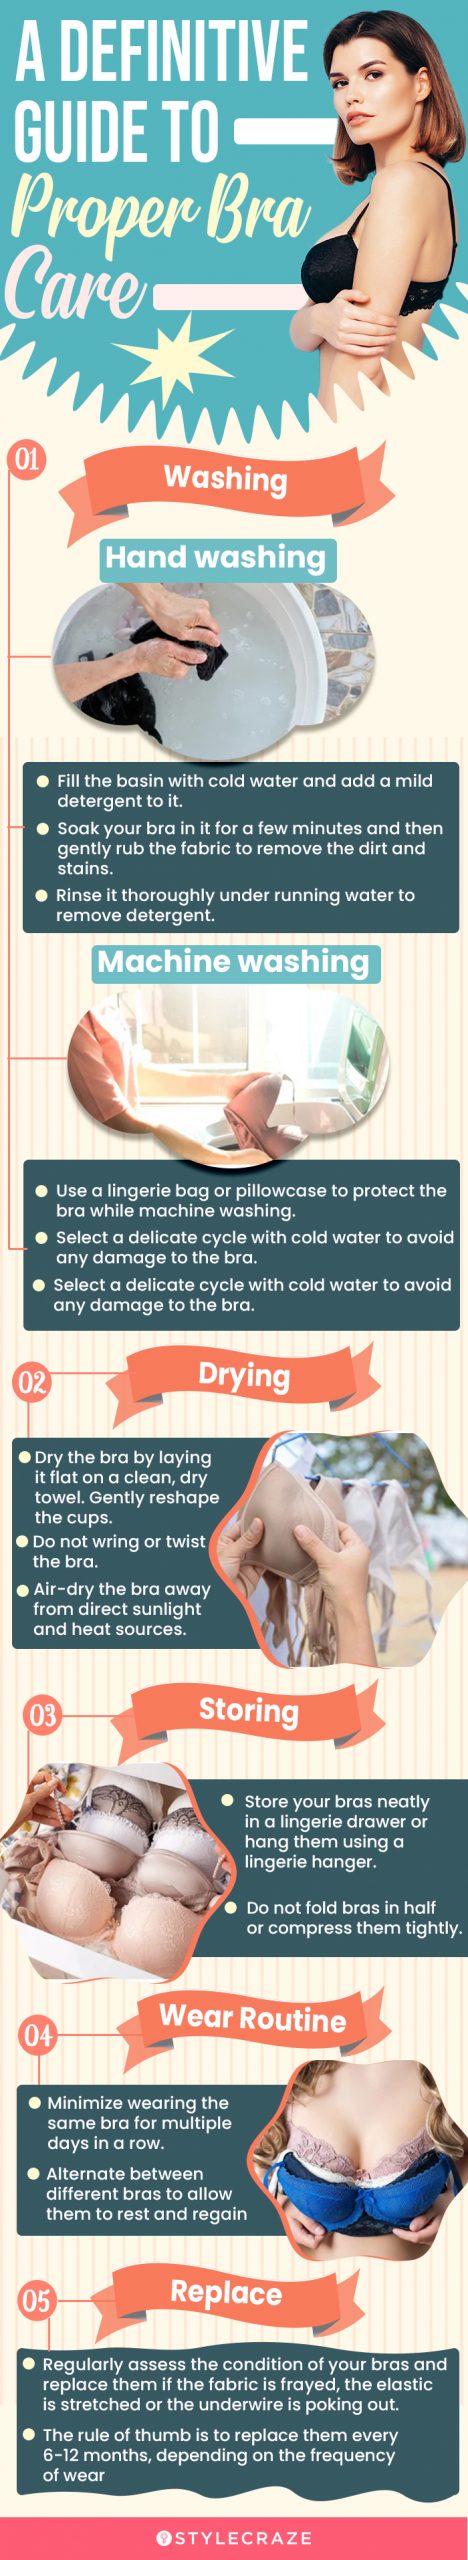 A Definitive Guide To Proper Bra Care (infographic)